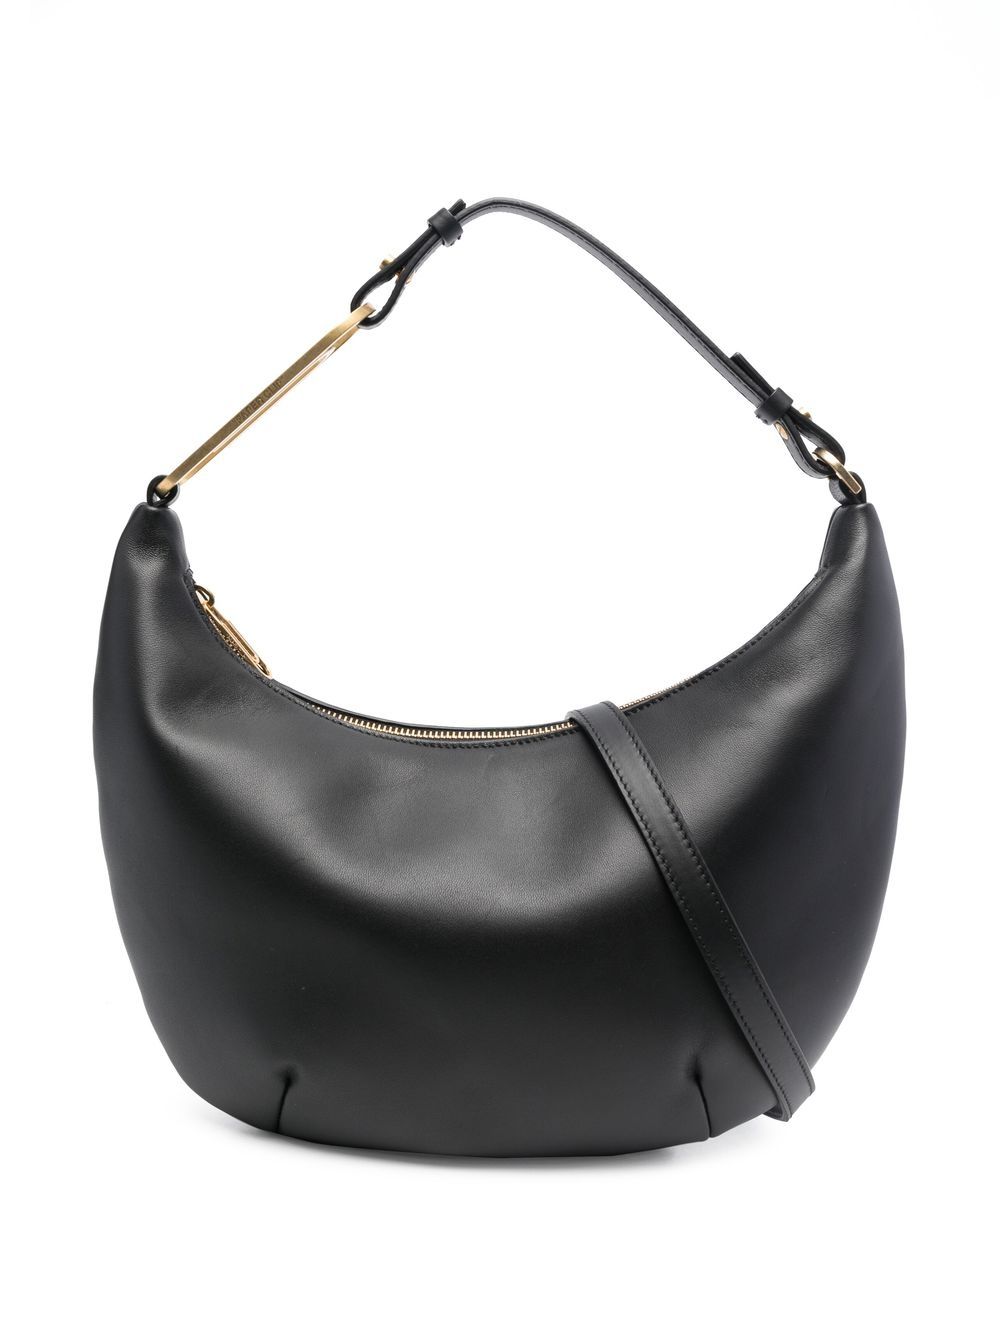 OVER EARTH Womens Handbags Soft Leather Hobo Shoulder Bag Ladies